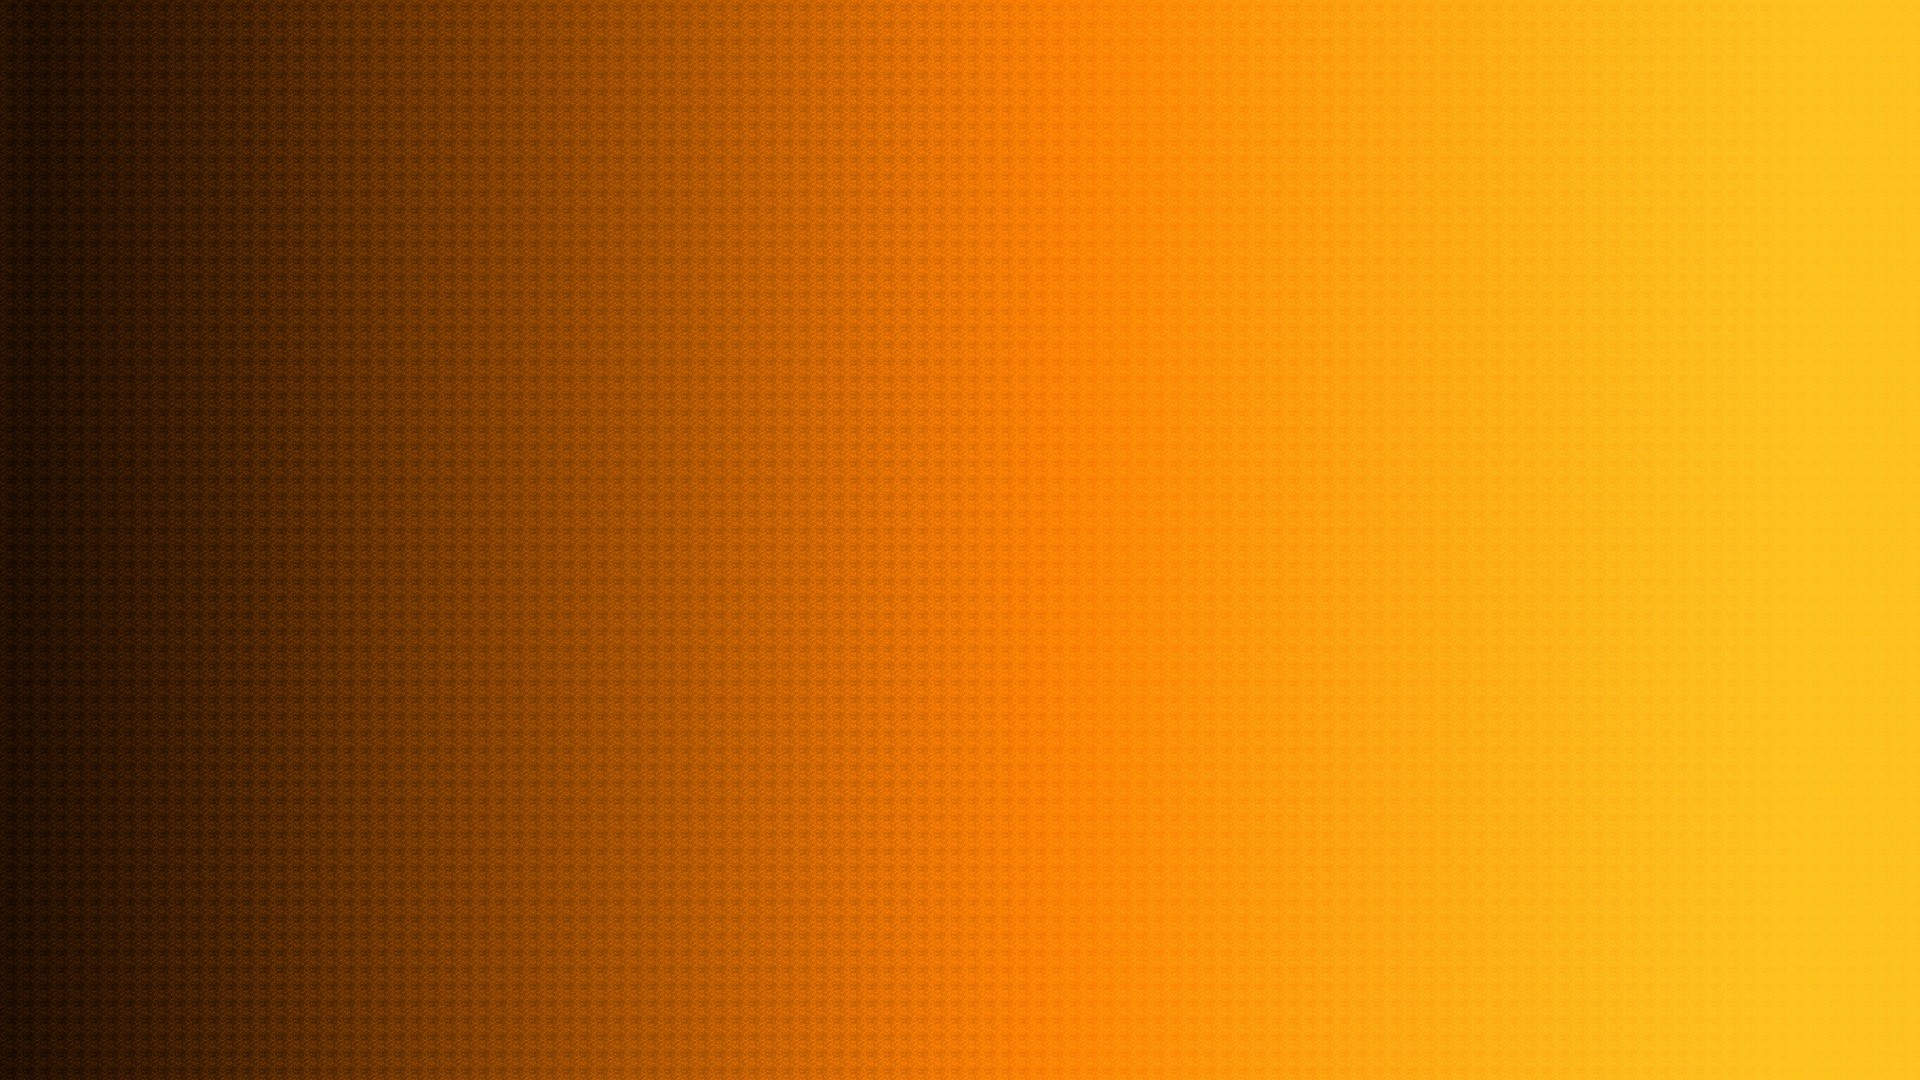  Orange  Gradient Background  Free Stock Photo Public 